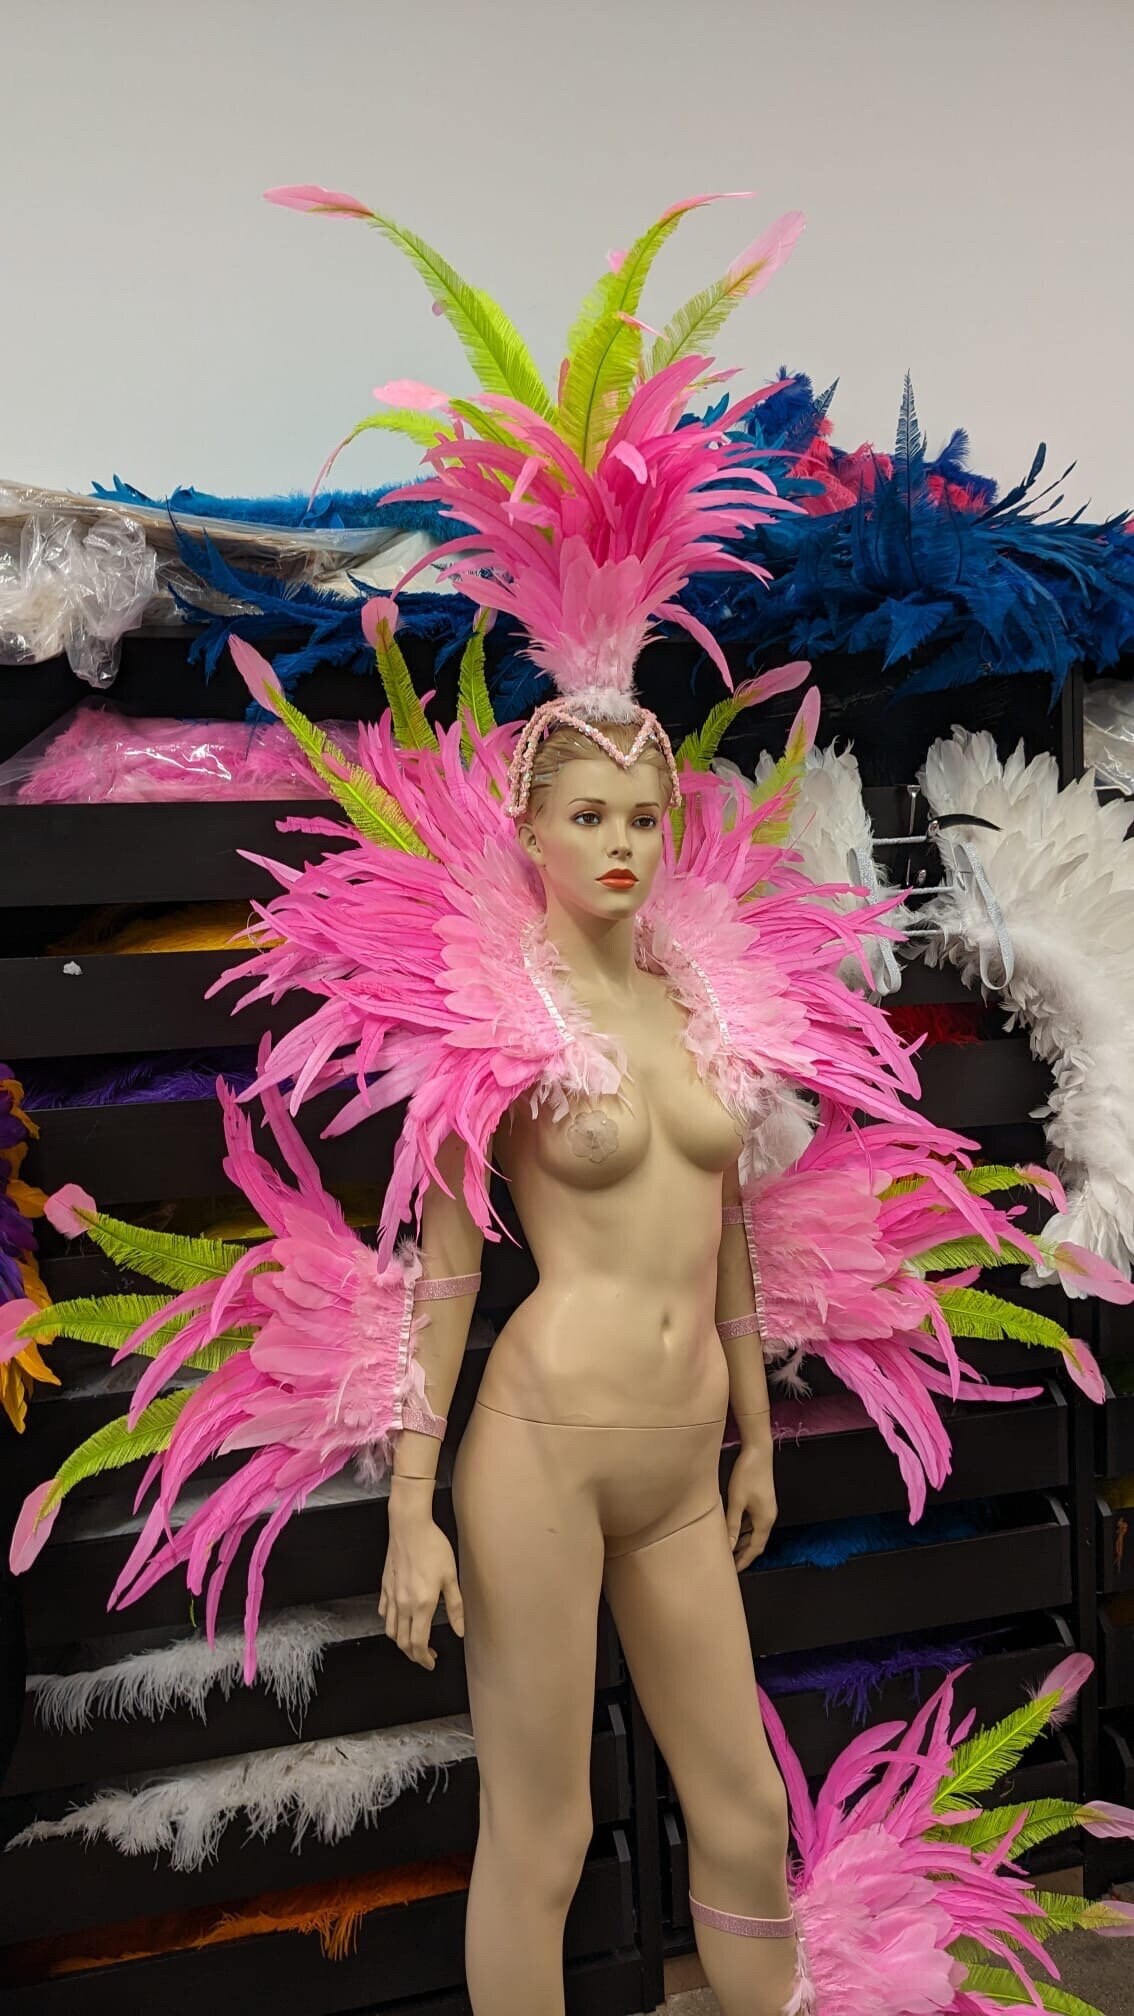 Carnival Costume Feathers Rhinestone Samba Costume Angel Wings